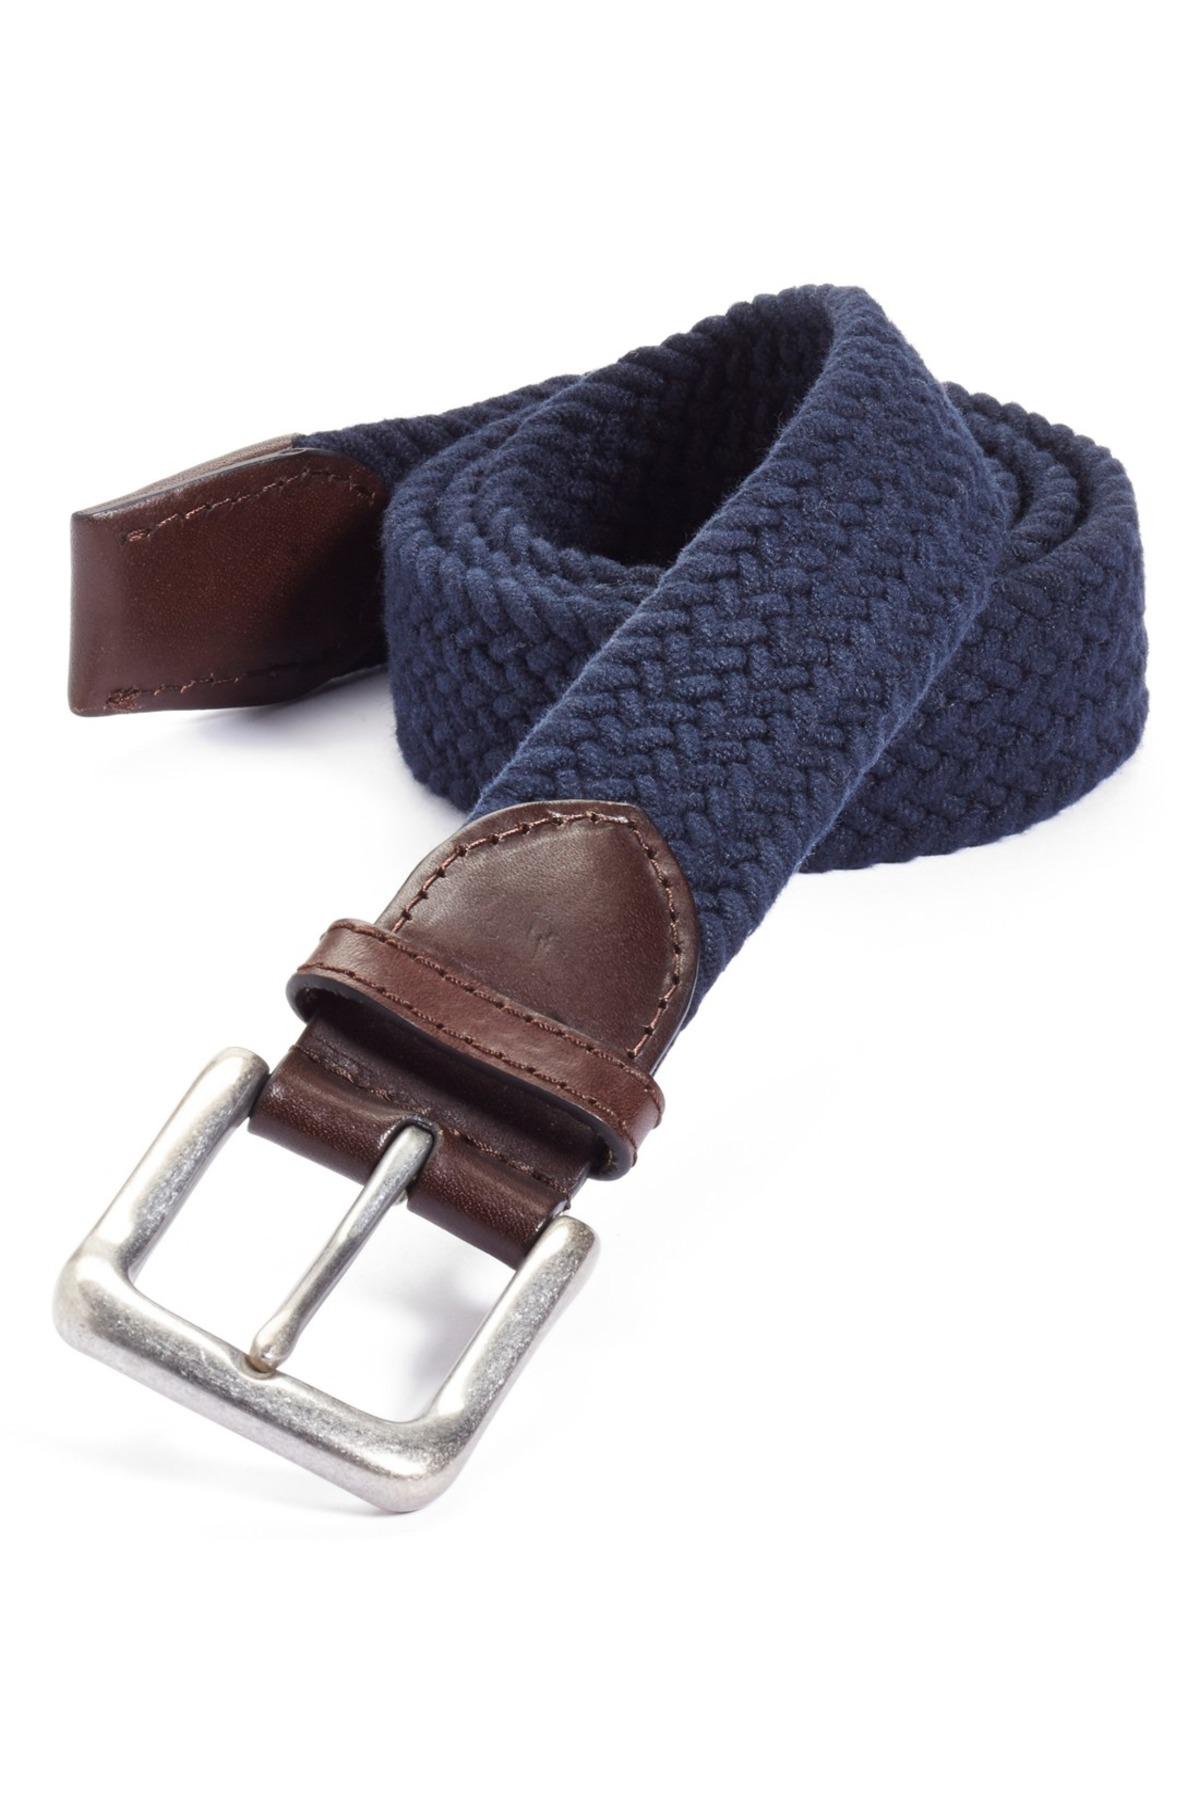 Trafalgar Cotton Web Belt in Navy (Blue) for Men - Lyst